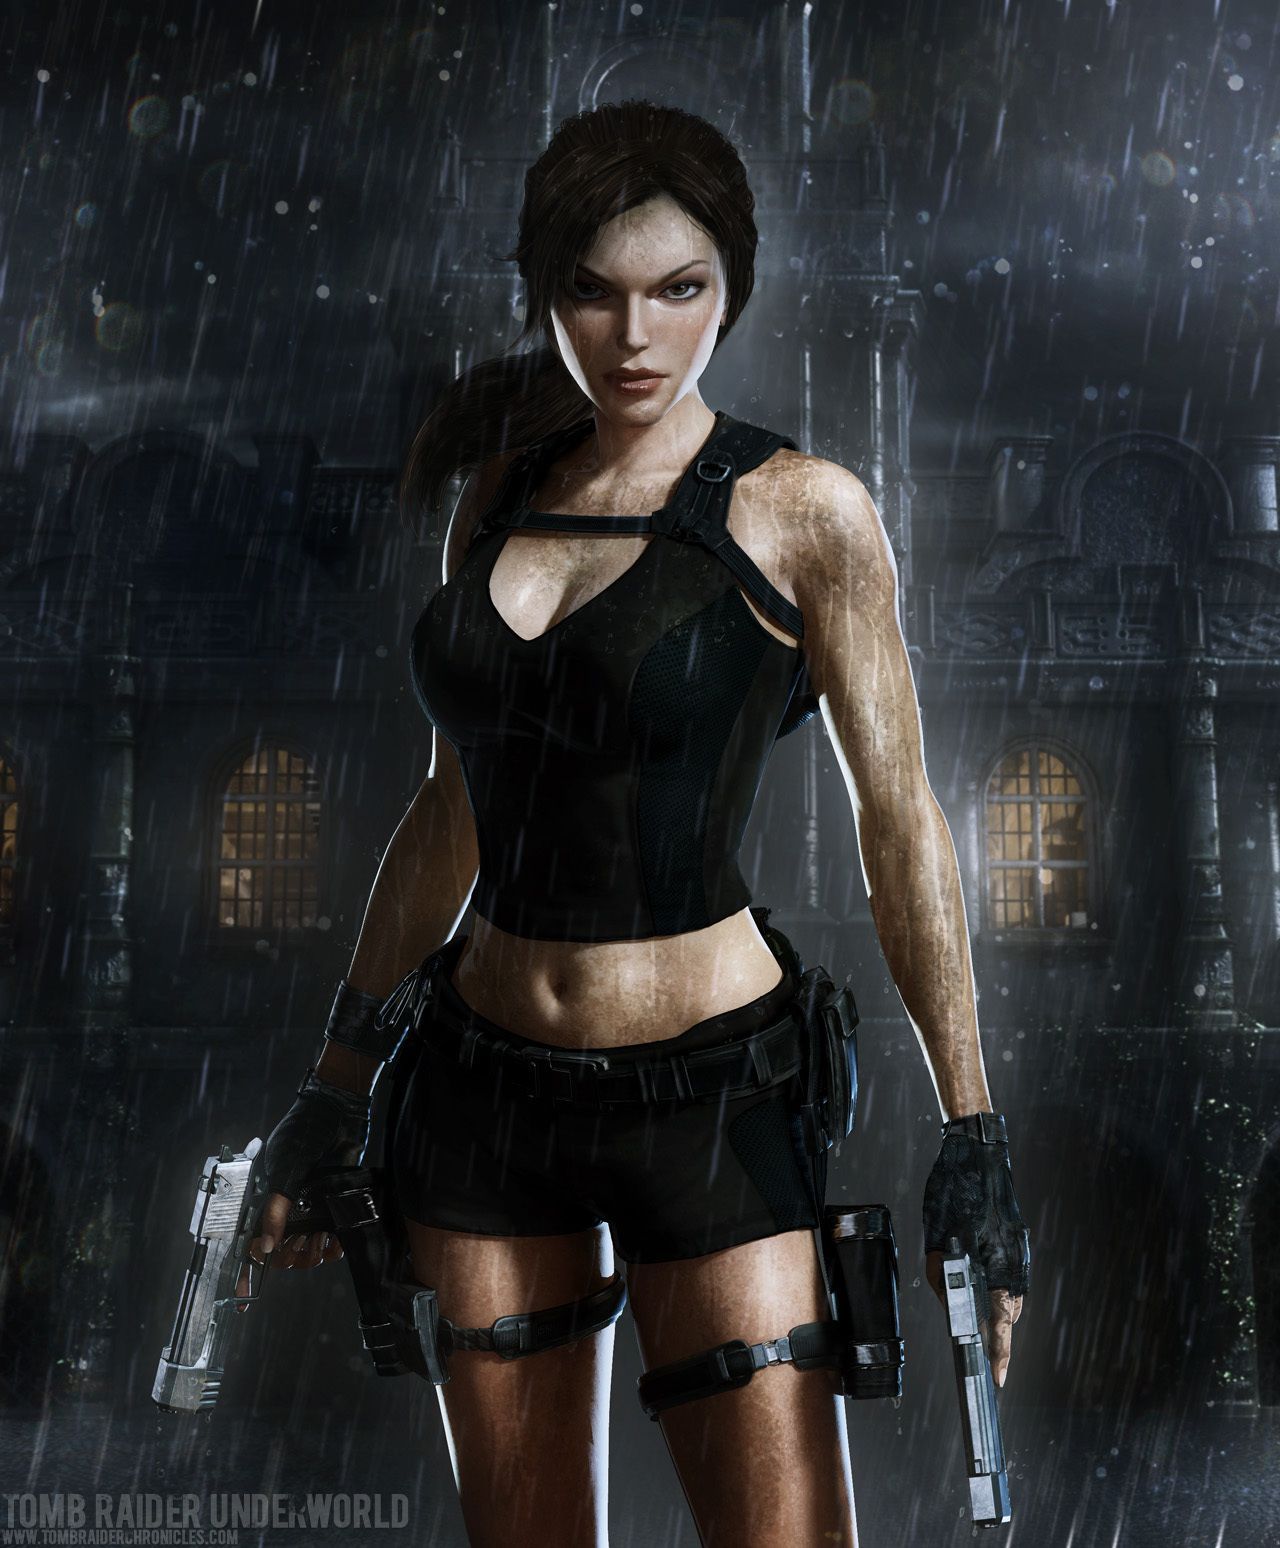 Tomb Raider Photo: Lara Croft. Tomb raider wallpaper, Tomb raider game, Tomb raider underworld